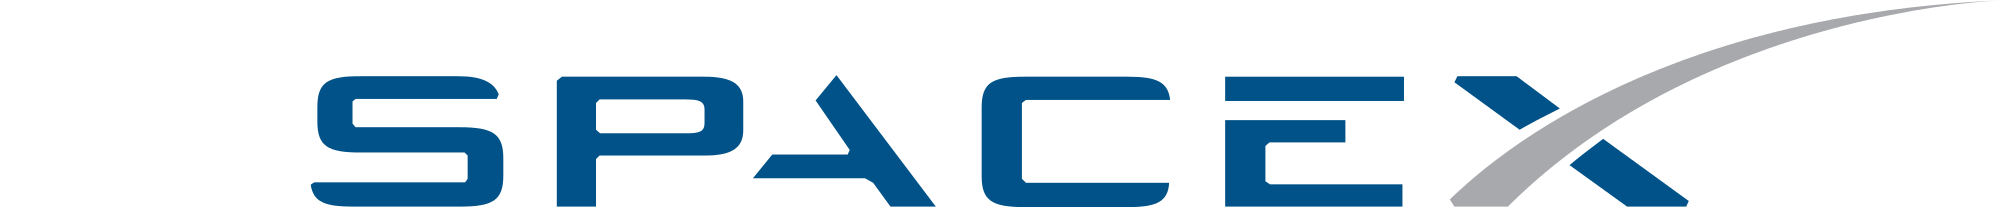 Cots NASA Logo - COTS: Commercial Partners | NASA